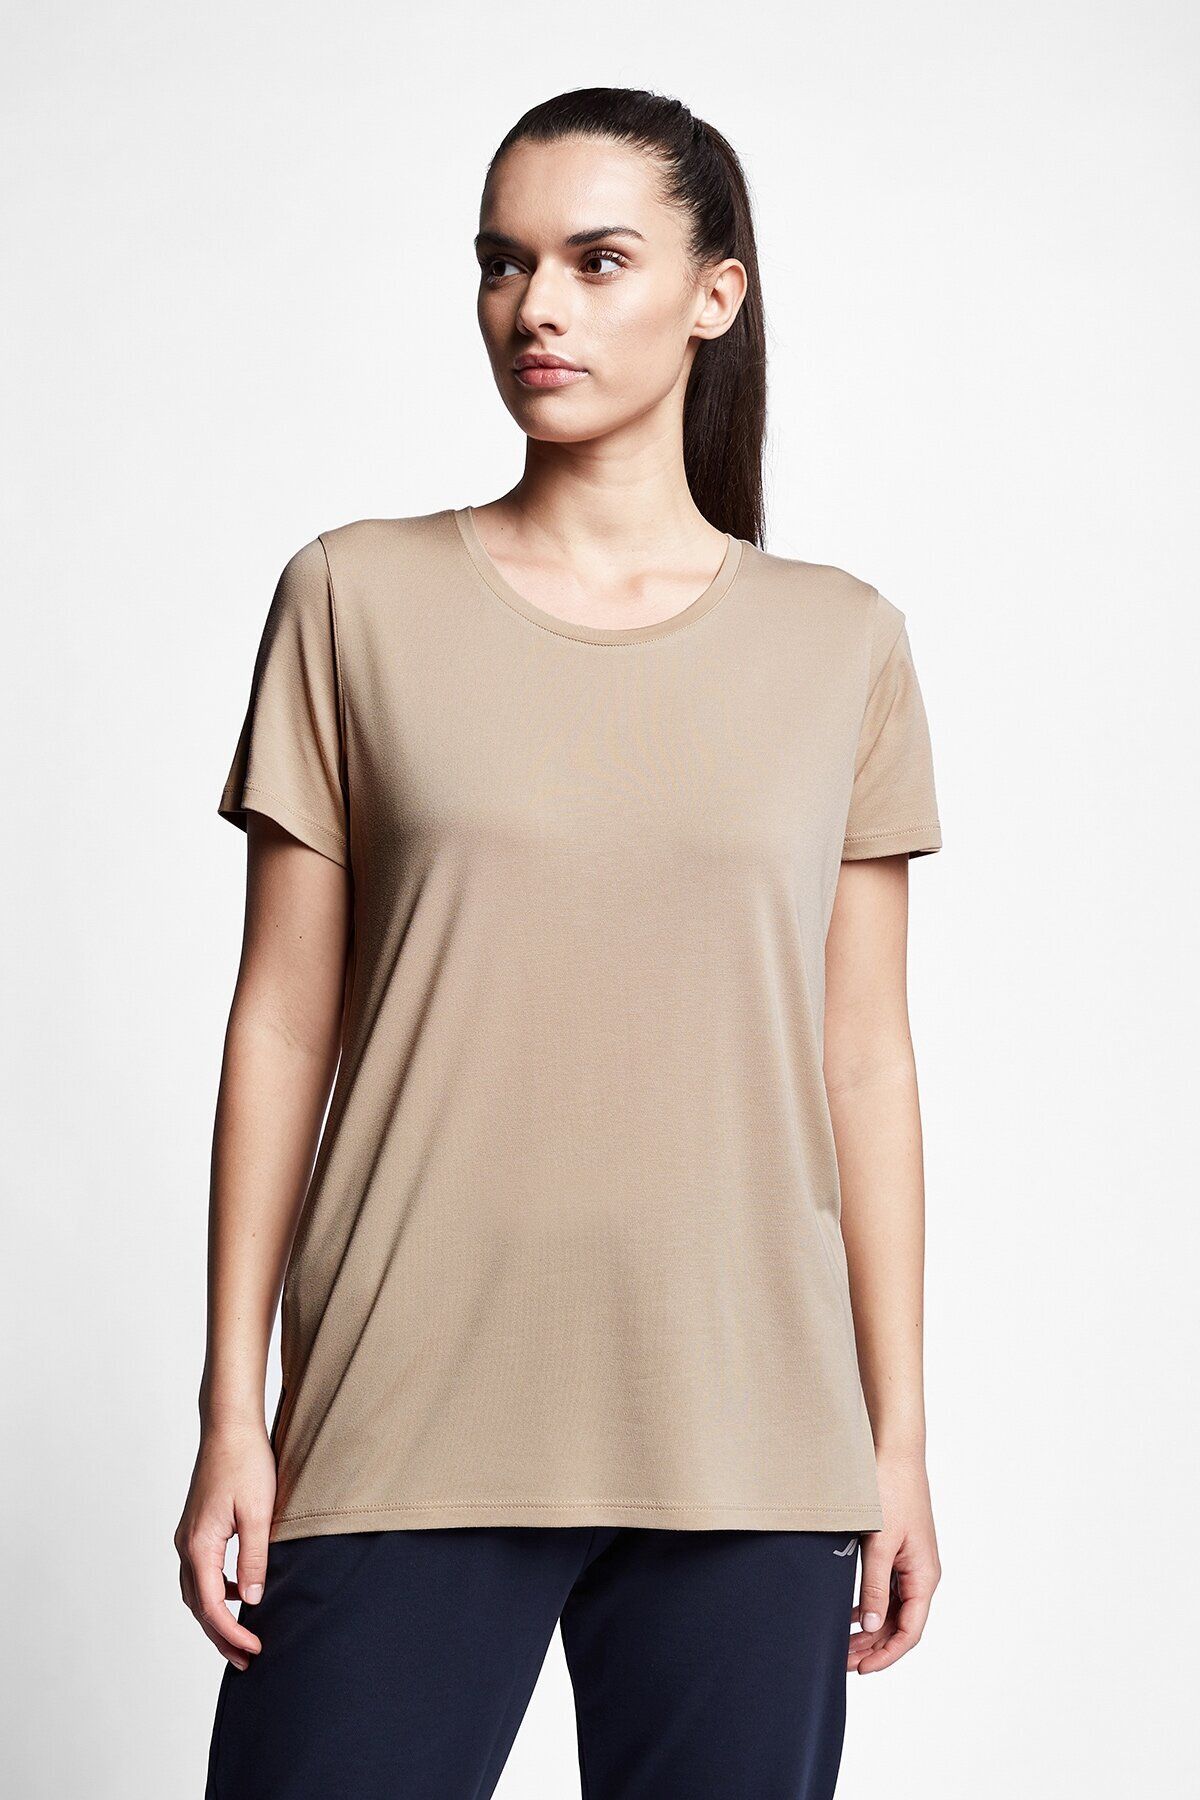 Lescon Kadın T-shirt 21s-2210-21n